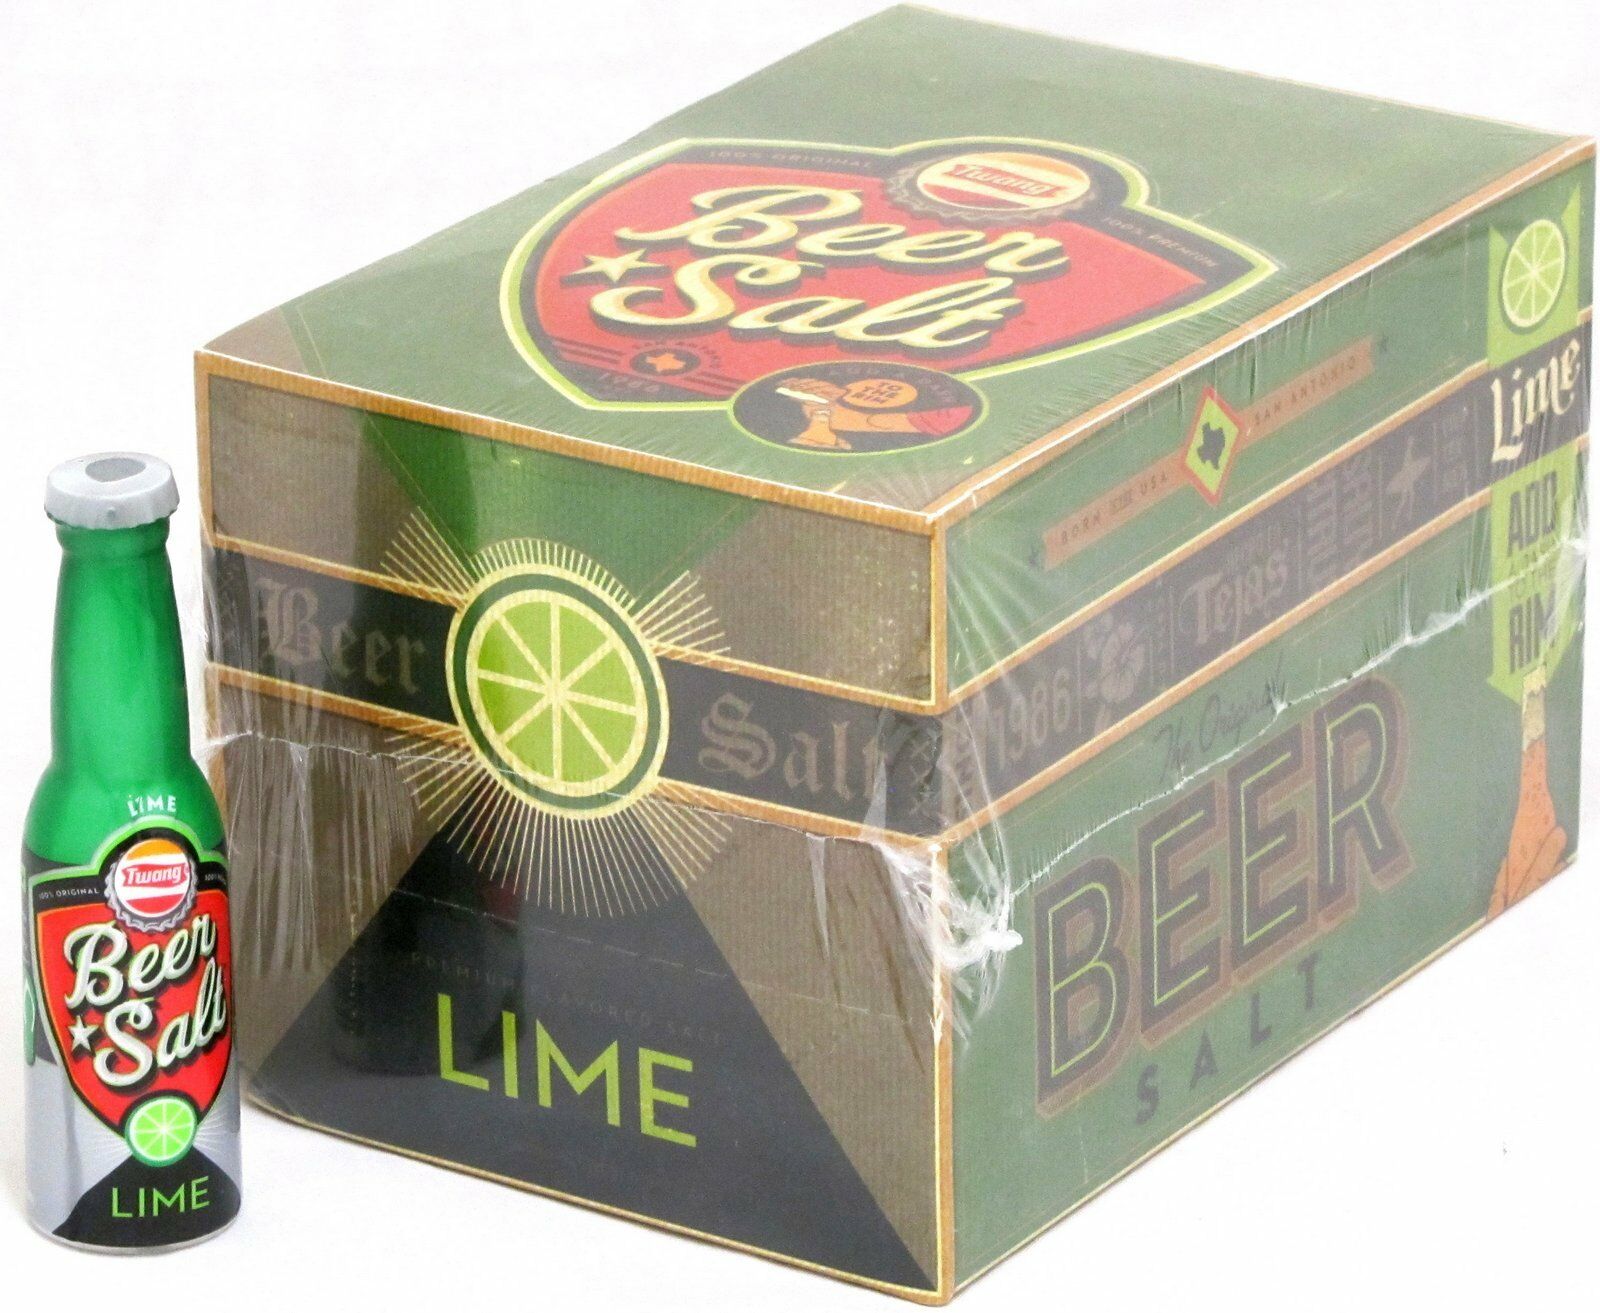 Twang The Original Beer Salt Lime 1.4 Oz Bottles Bulk 24 Count Box